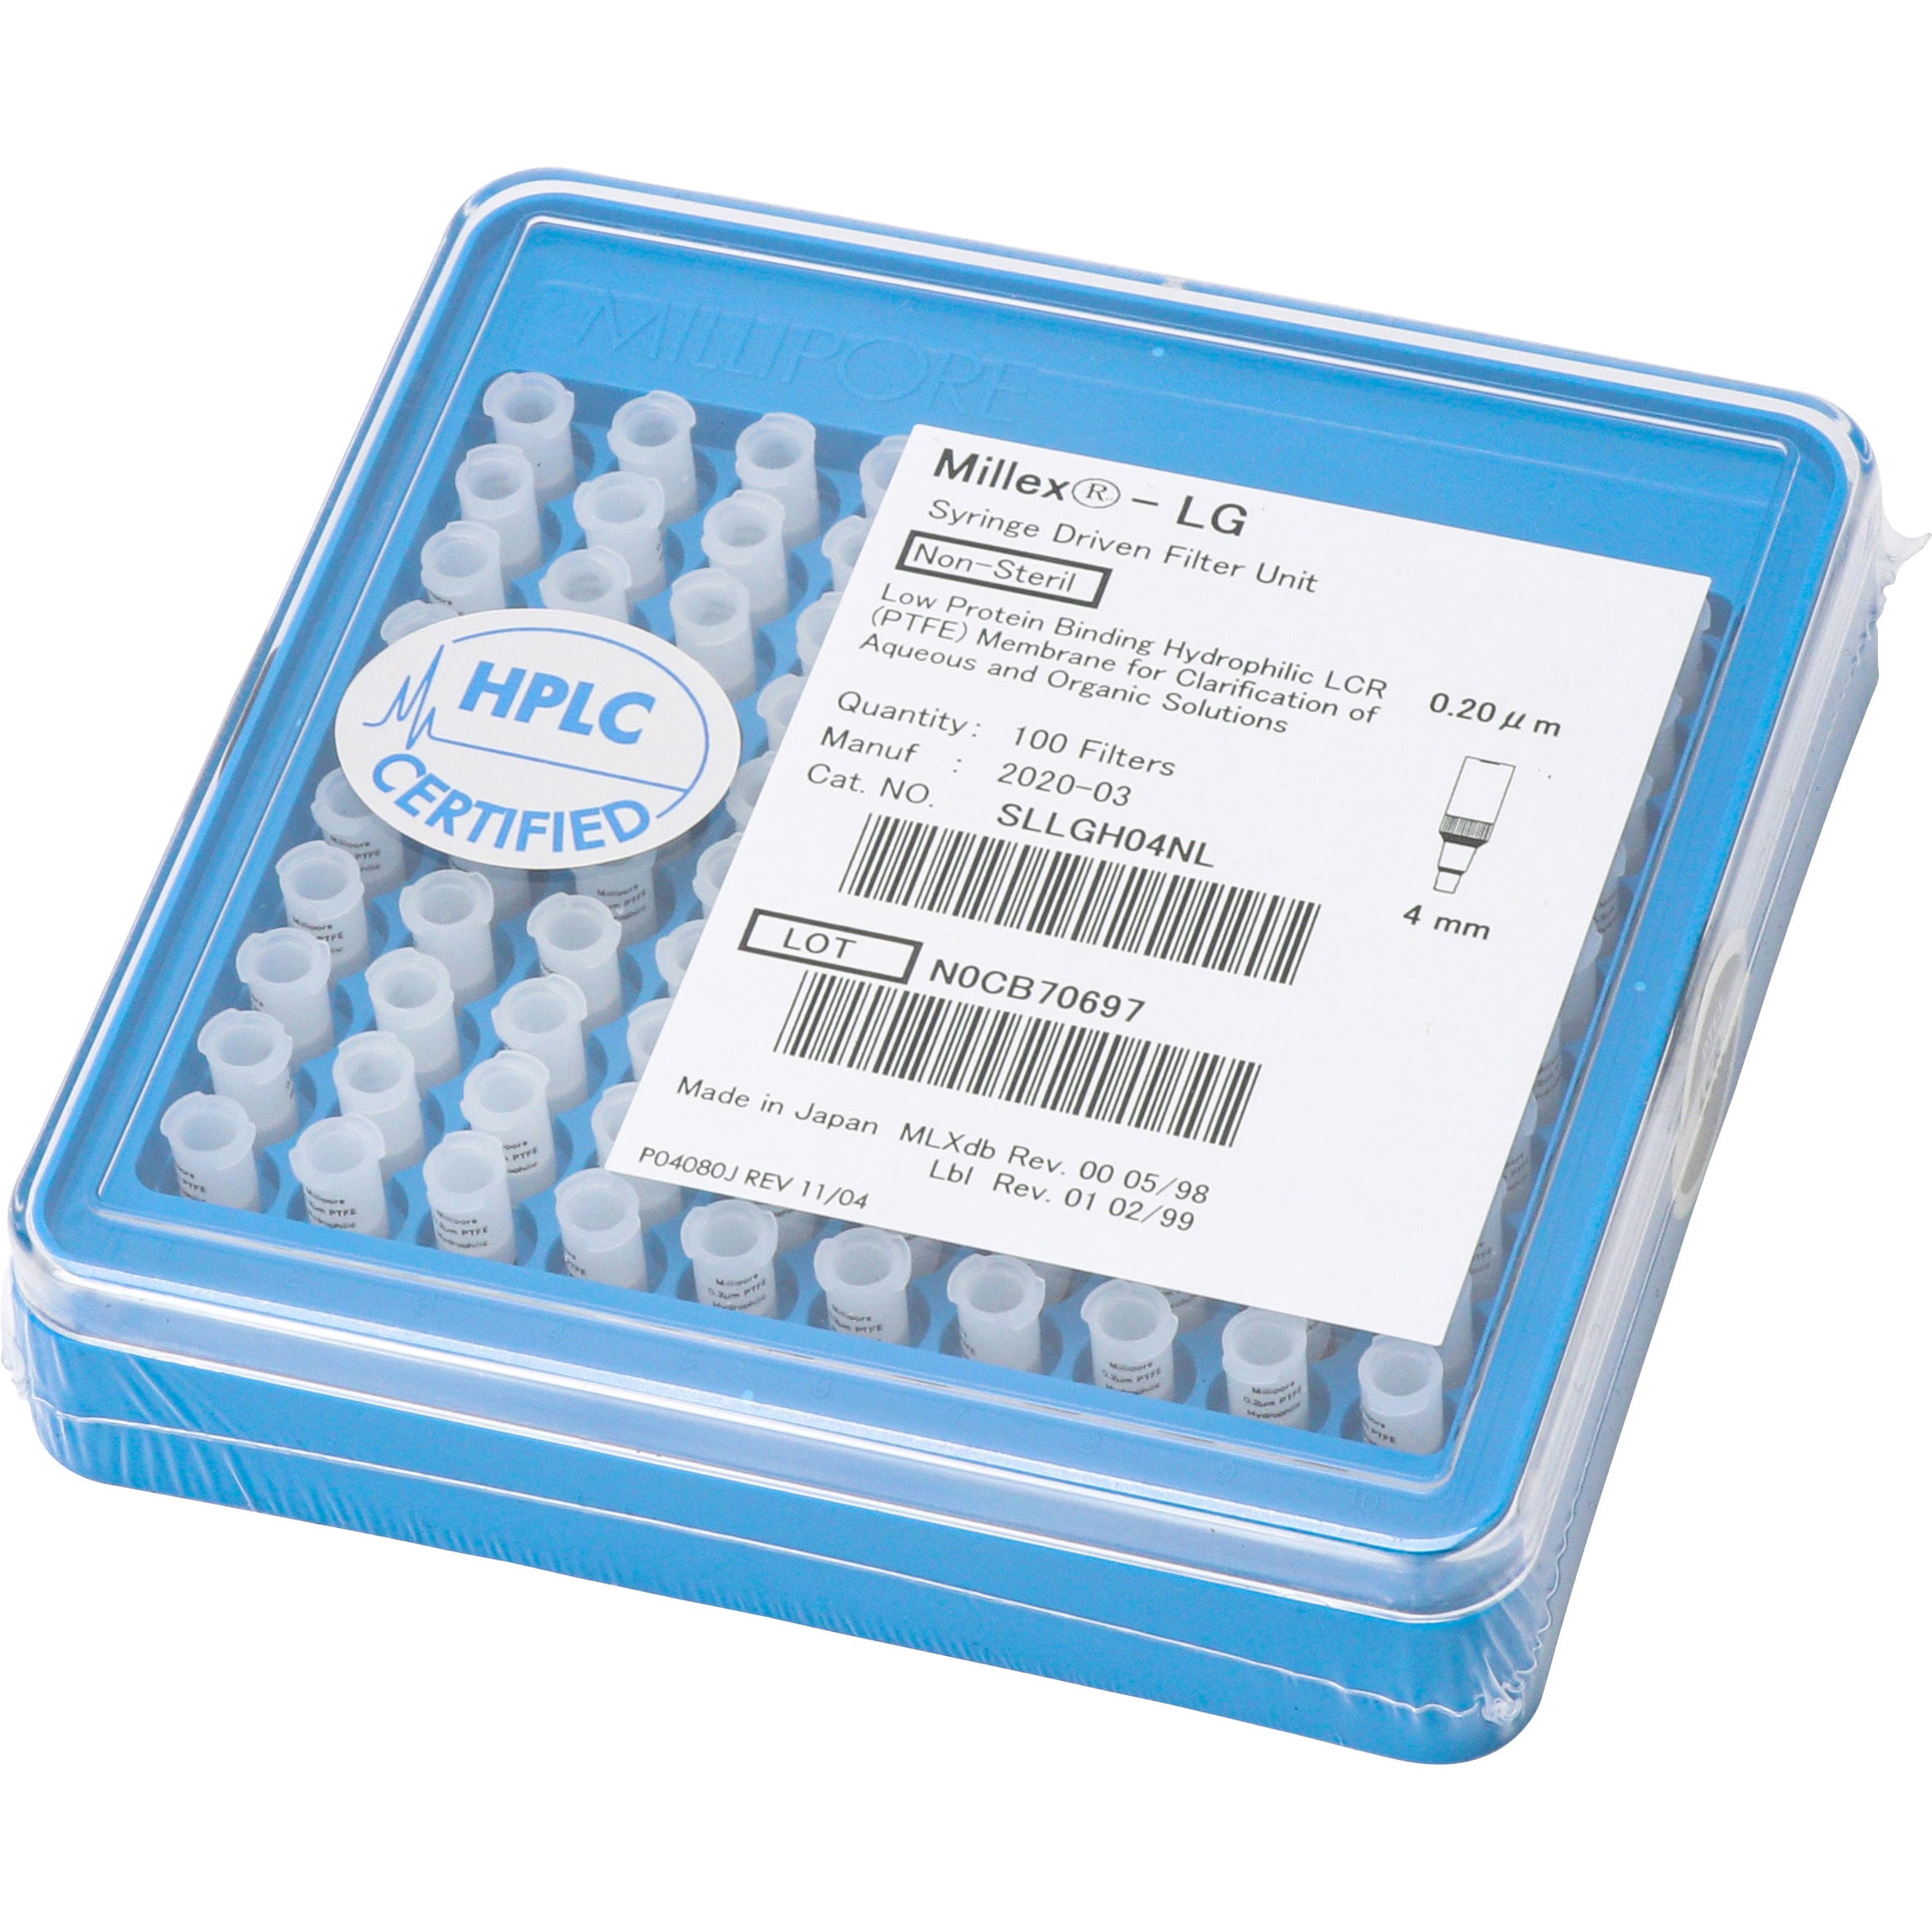 SLLGH04NL マイレクス(HPLC前処理) 1ケース(100個) Merck(メルク